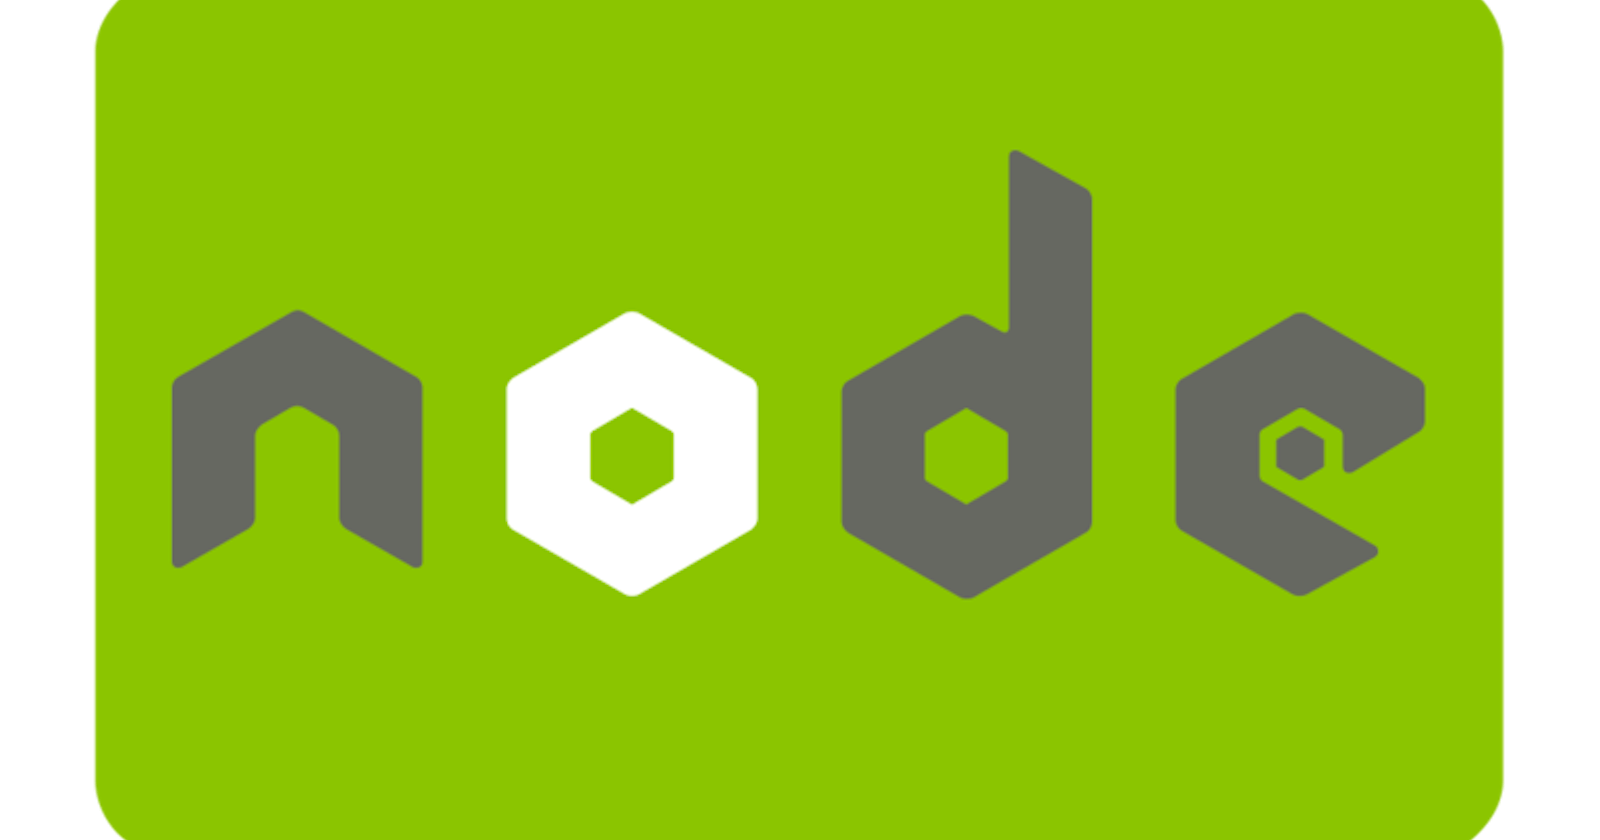 Node.js Explained - A beginner guide